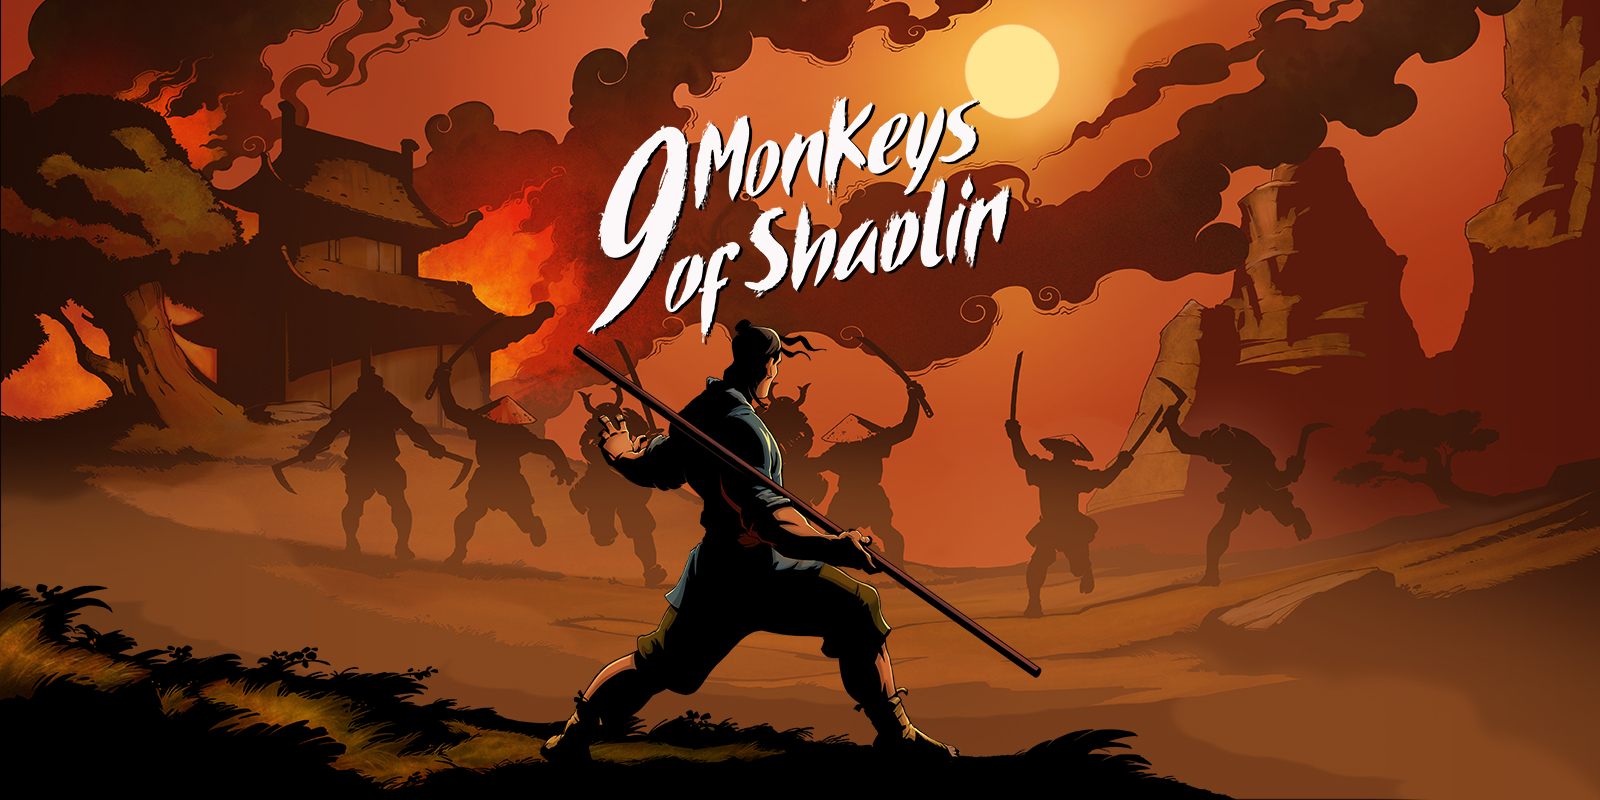 9 Monkeys Of Shaolin Artwork